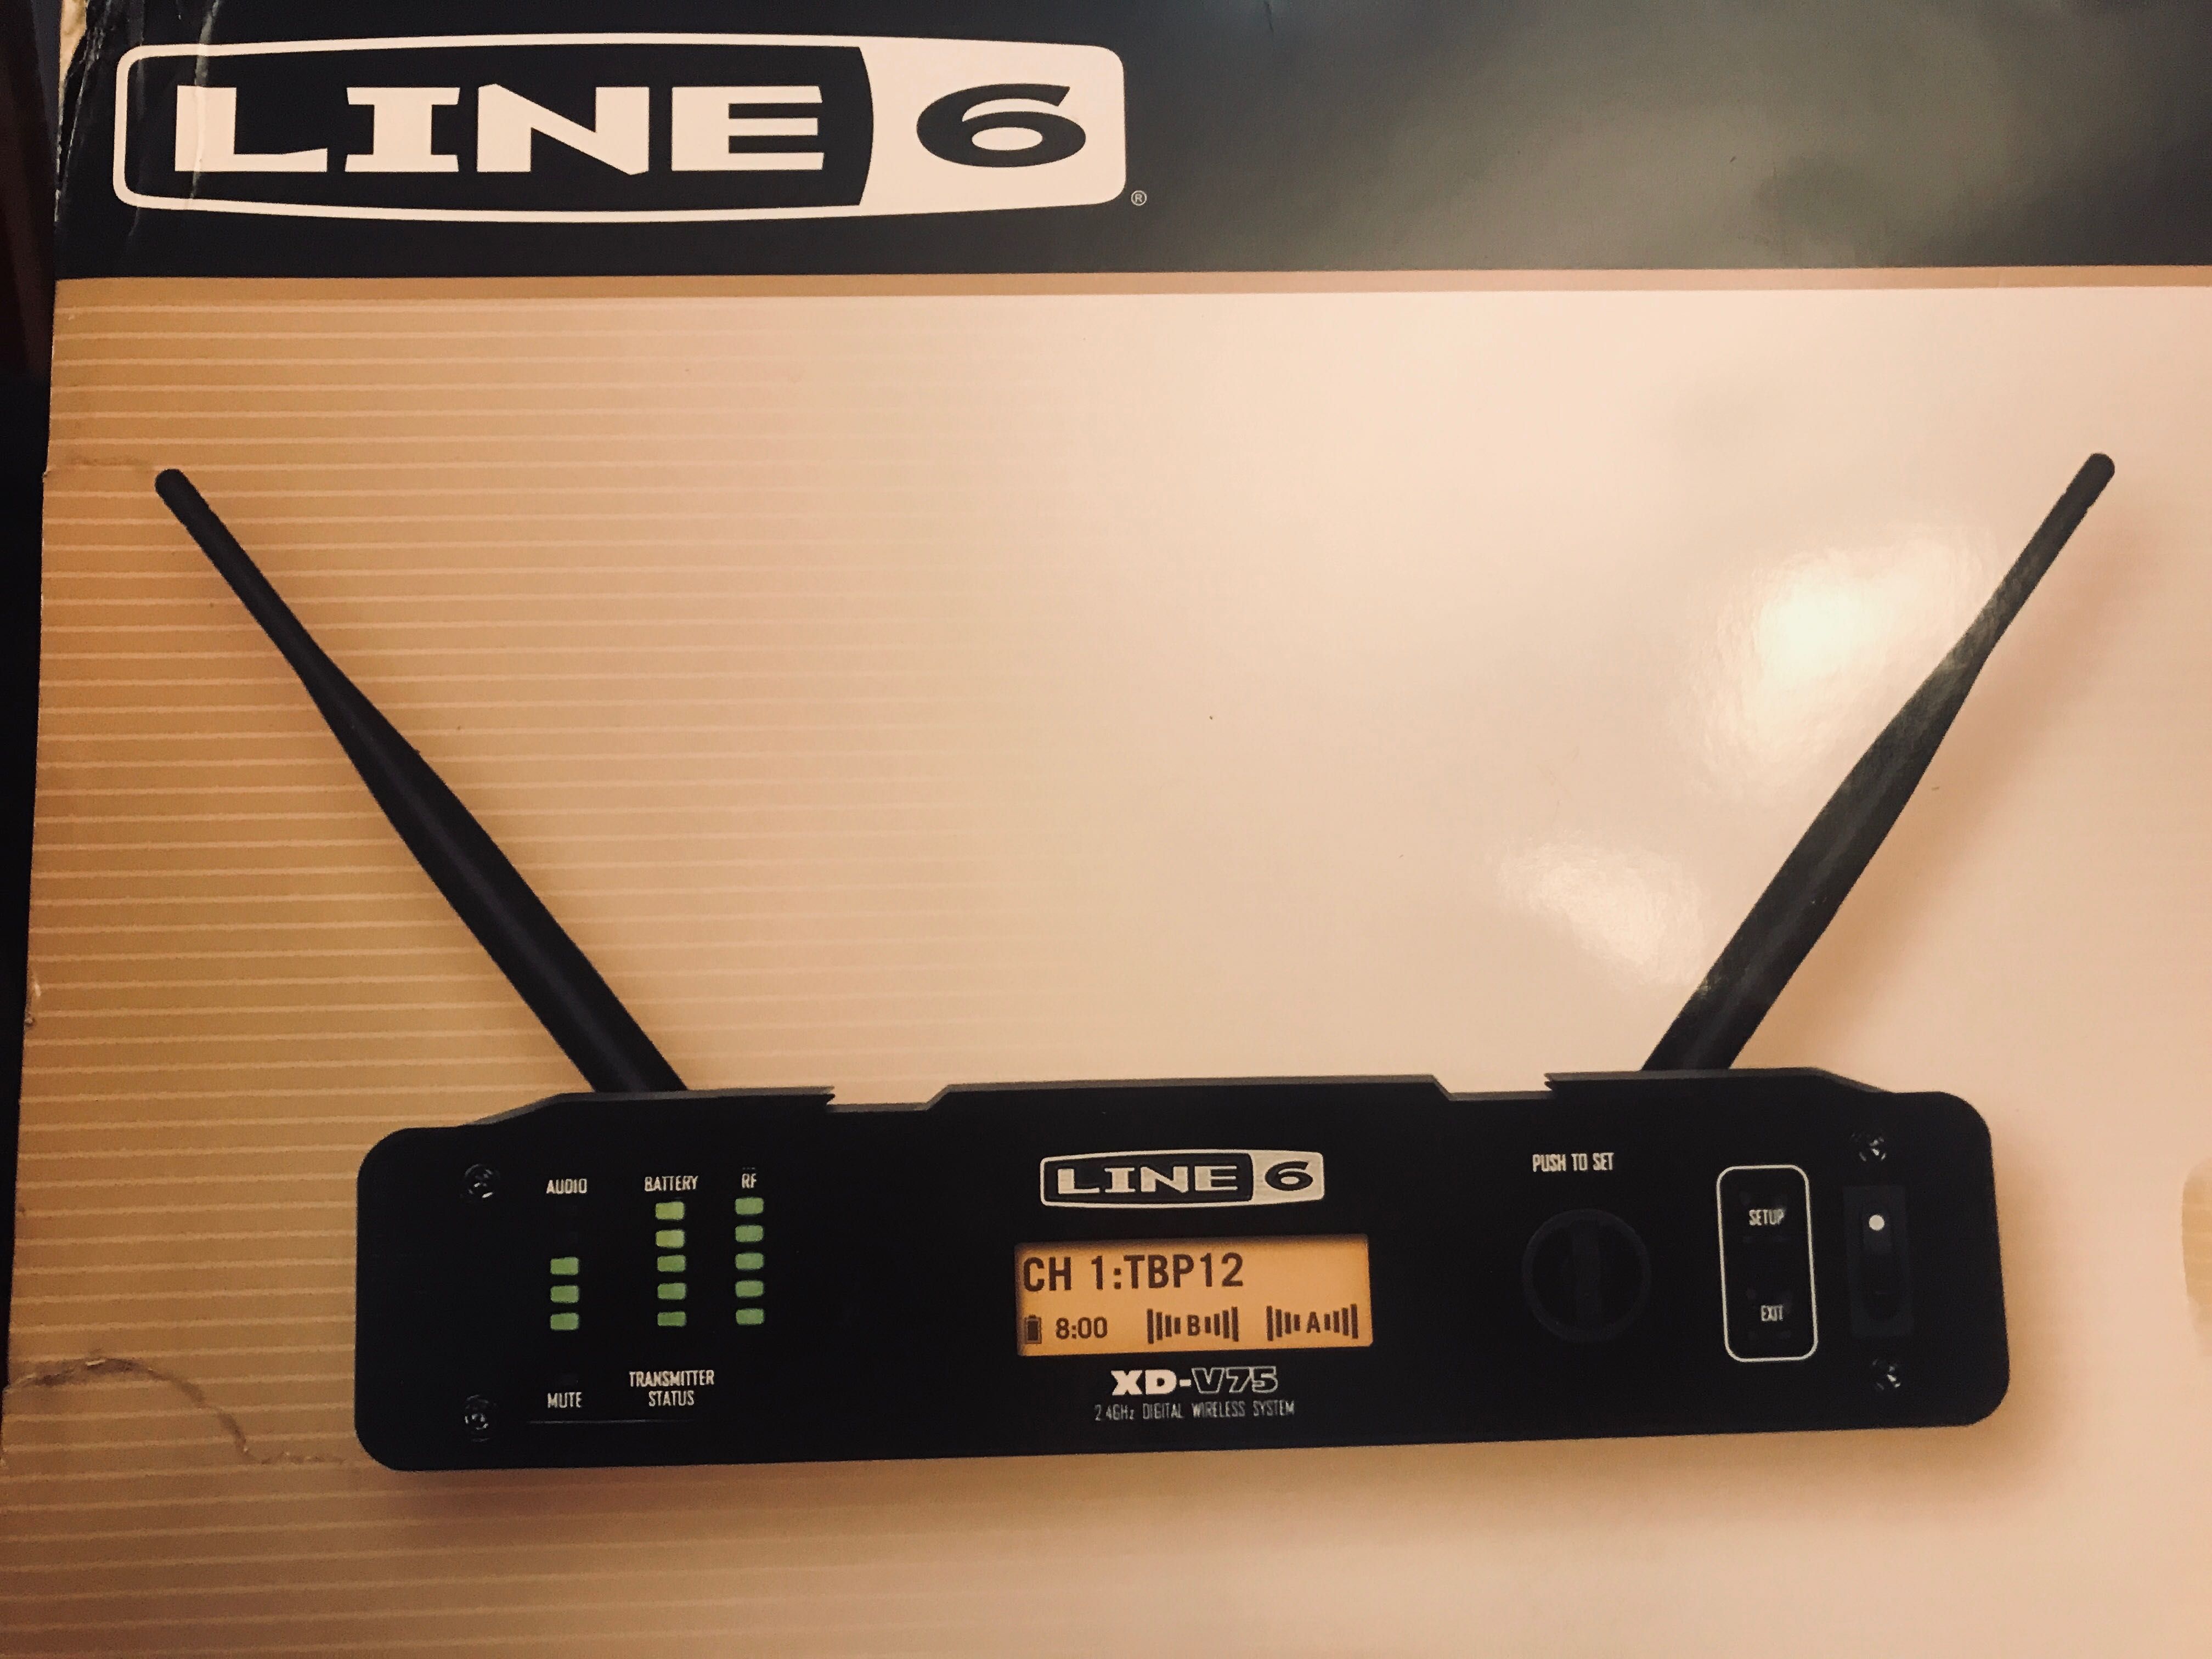 Line 6 wireless microfoane headset